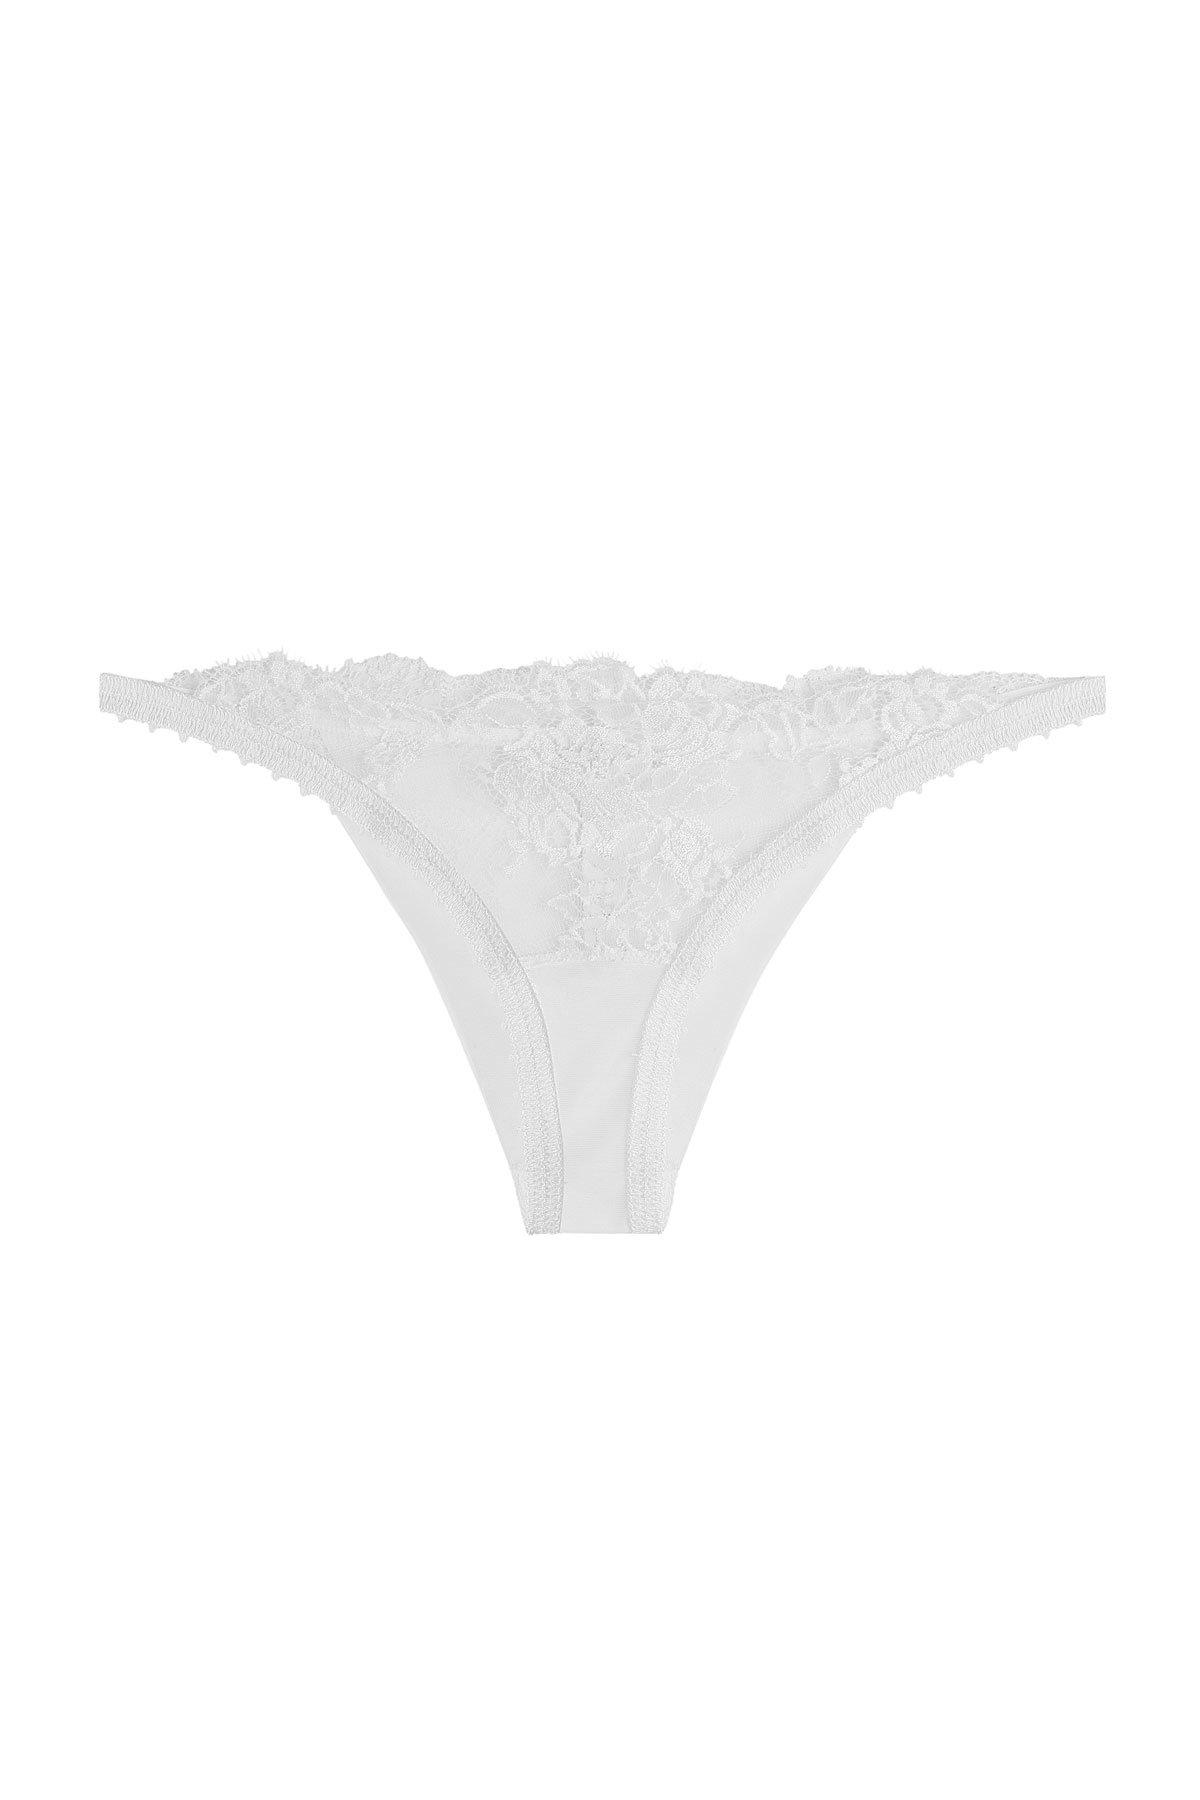 Lyst - La Perla Lace Panties in White